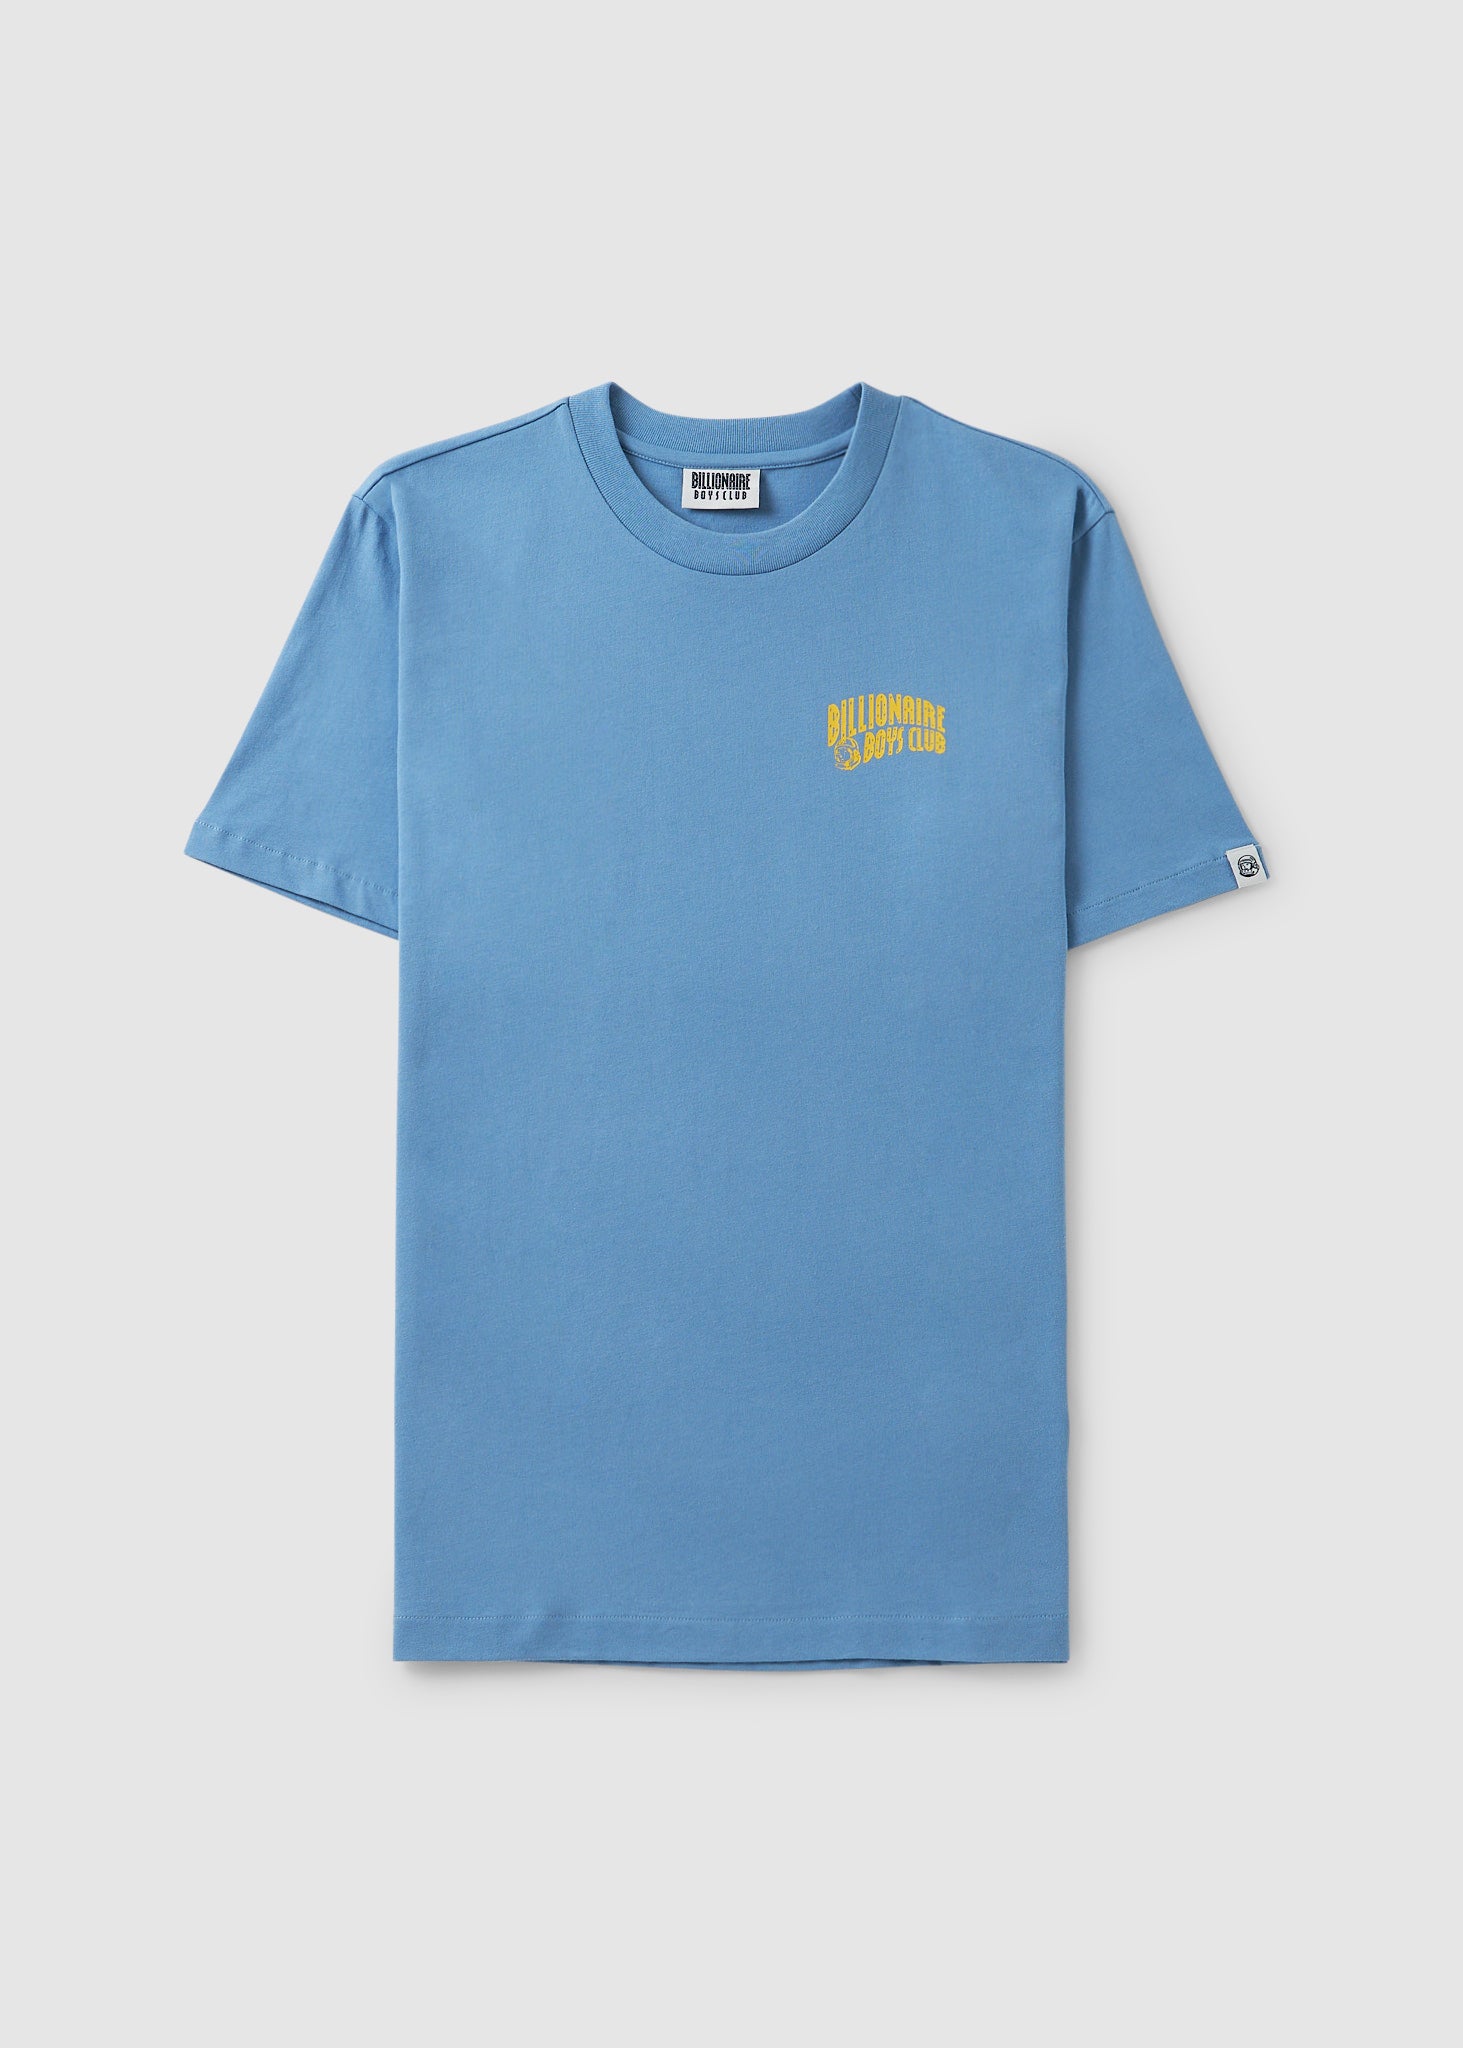 Image of Billionaire Boys Club Mens Small Arch Logo T-Shirt In Powder Blue